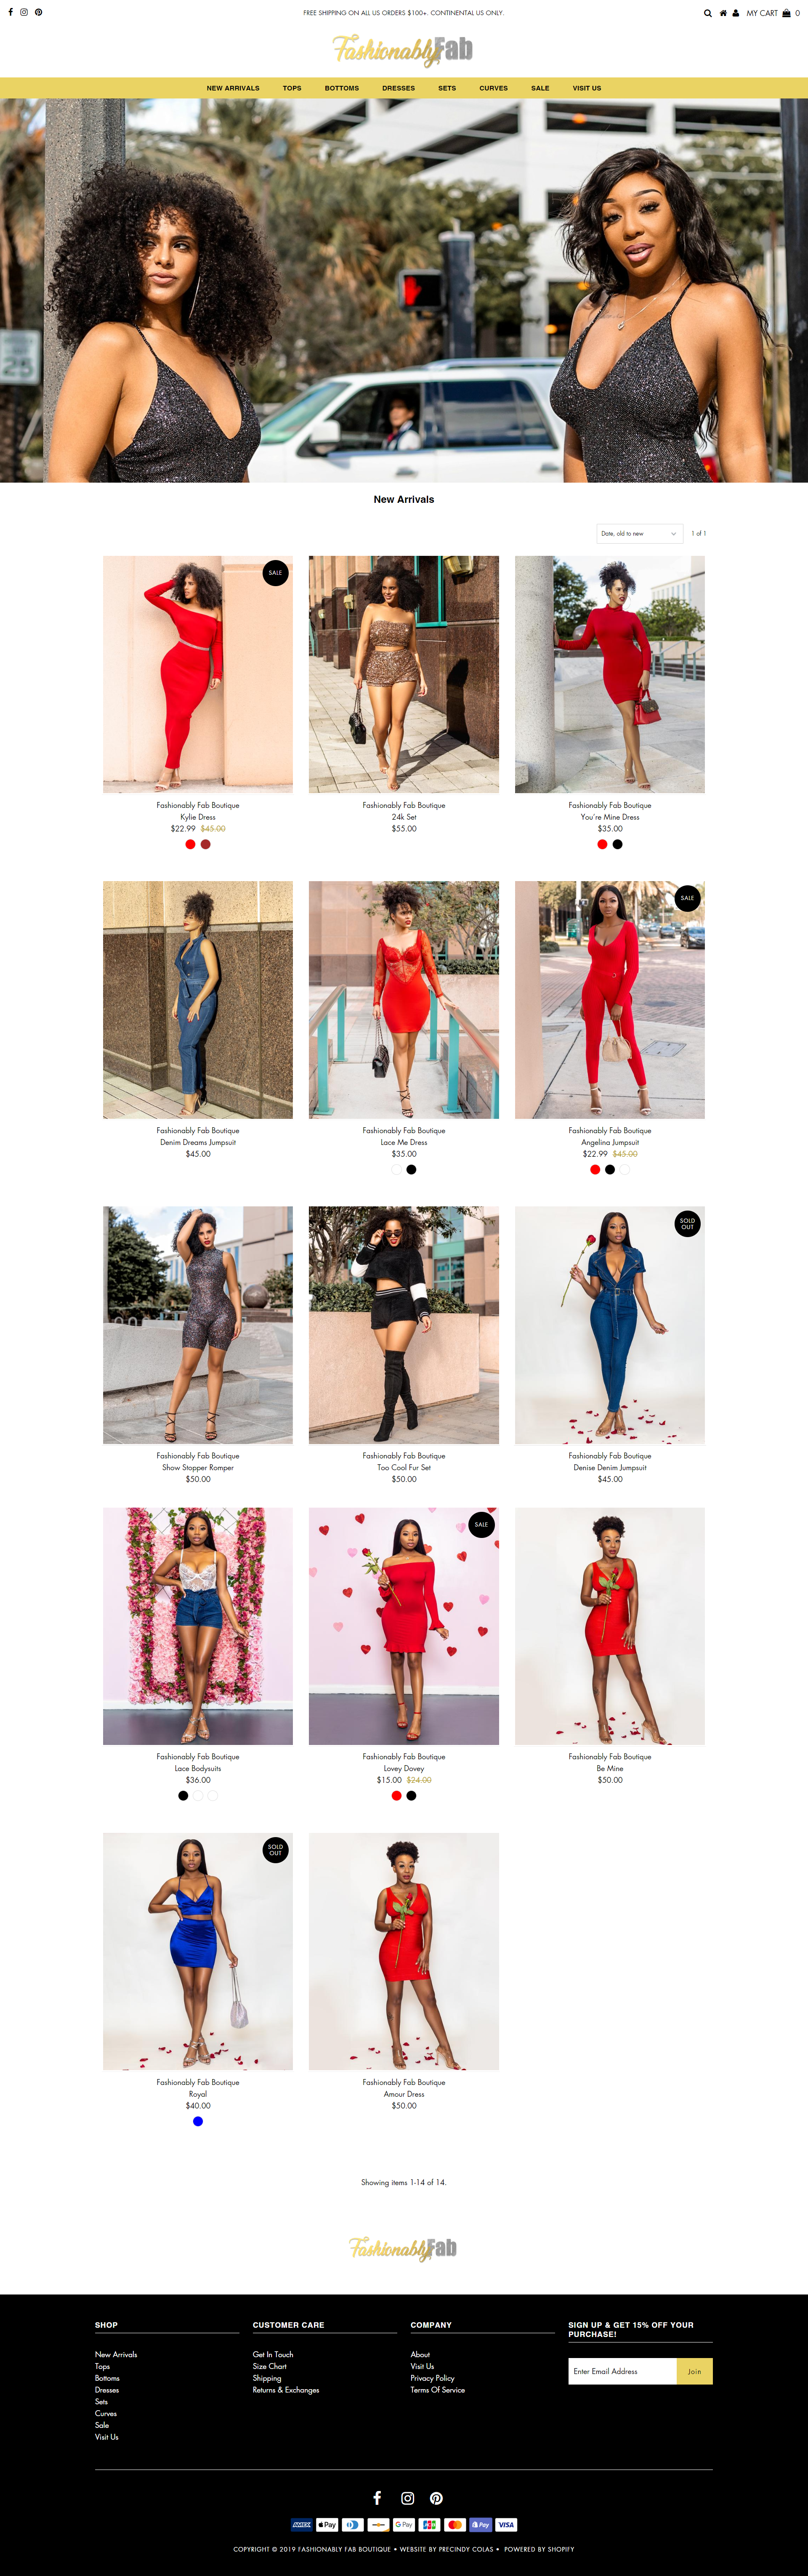 precindy-colas-fashionably-fab-boutique-web-design-collection-page.png